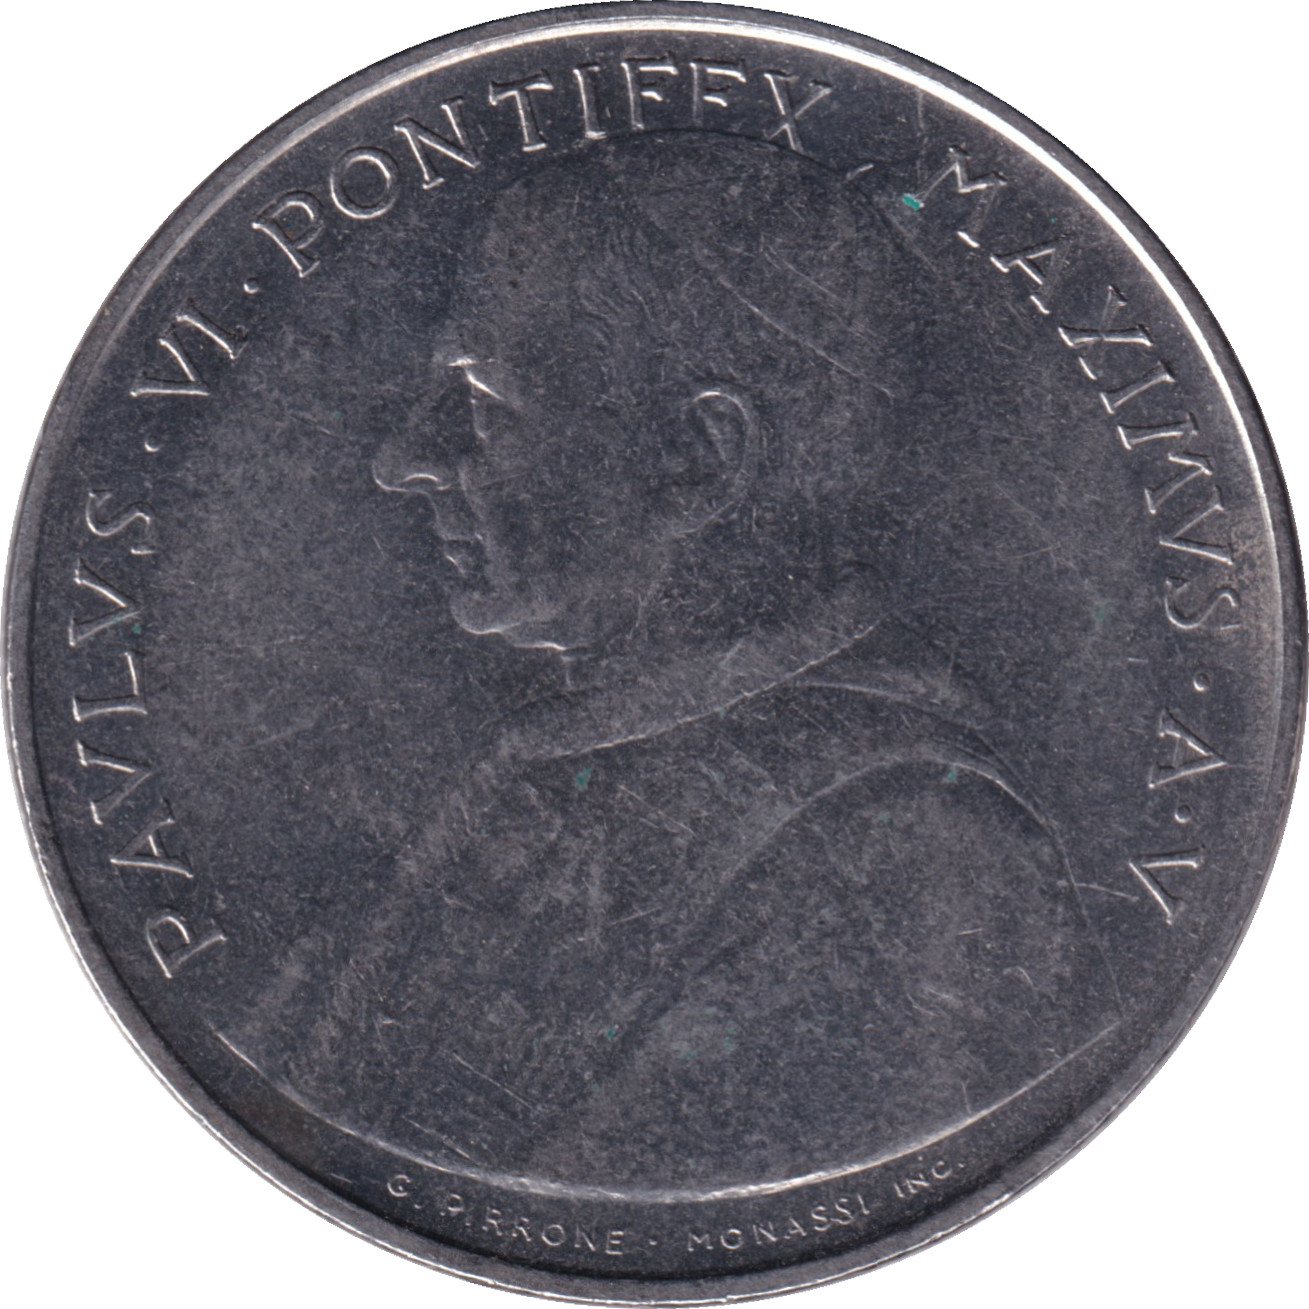 100 lire - Paul VI - Saint Pierre